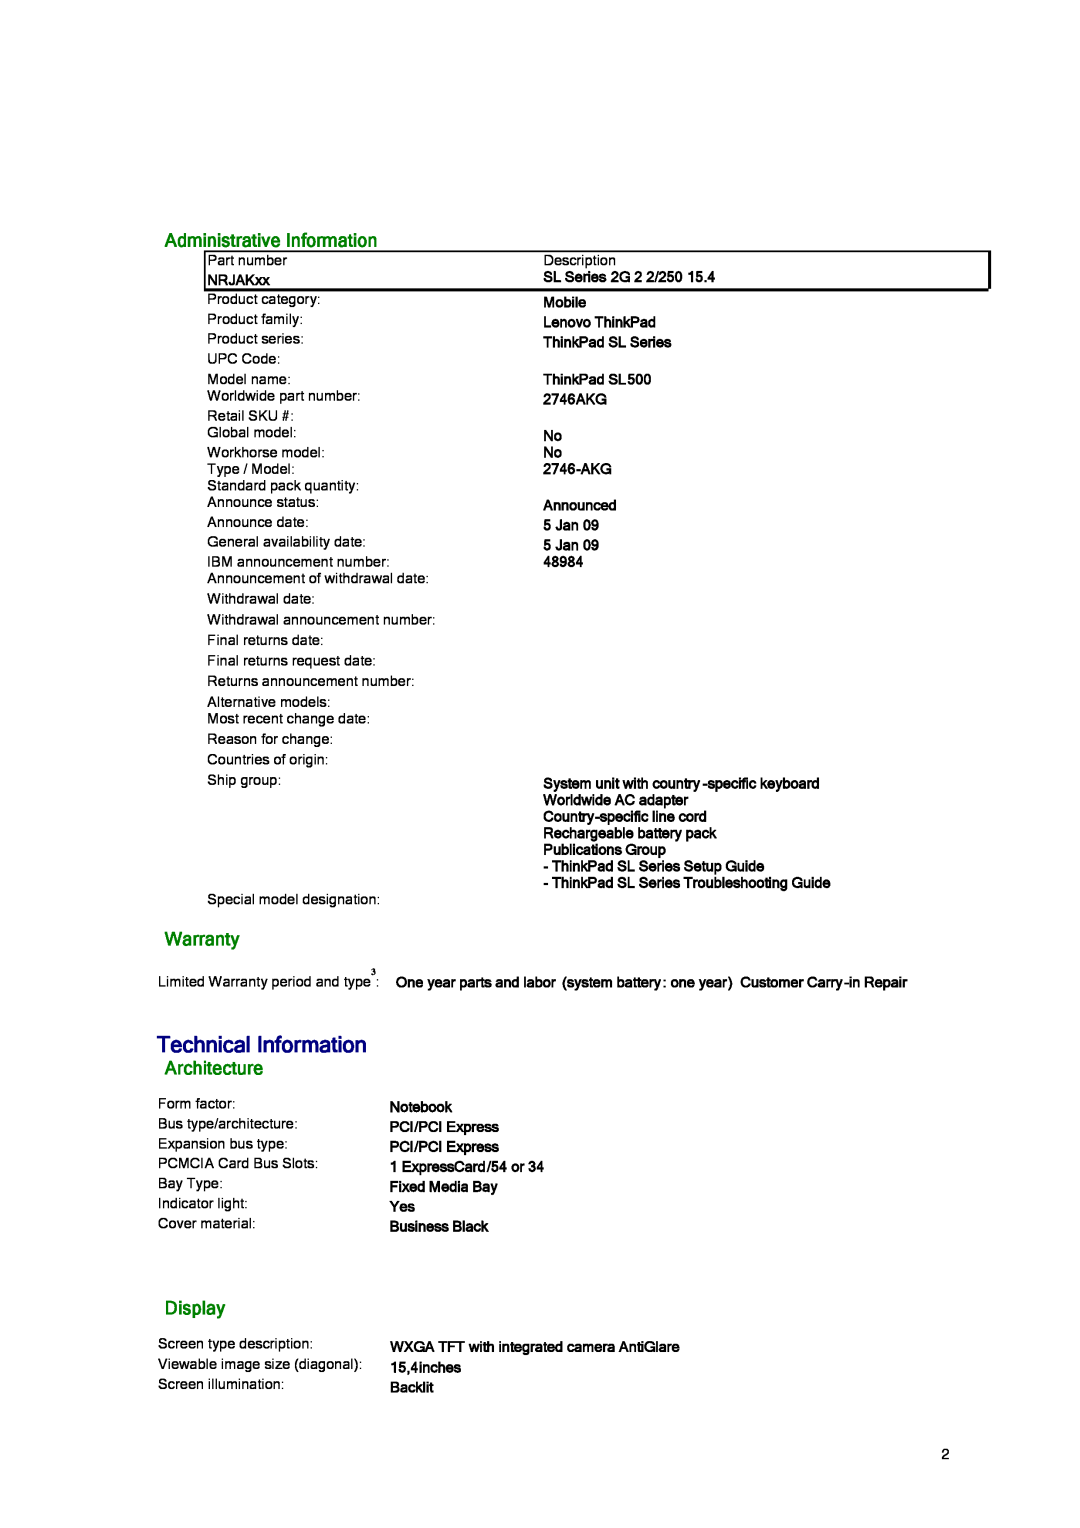 Lenovo NRJAKxx manual Technical Information, Administrative Information, Warranty, Architecture, Display 